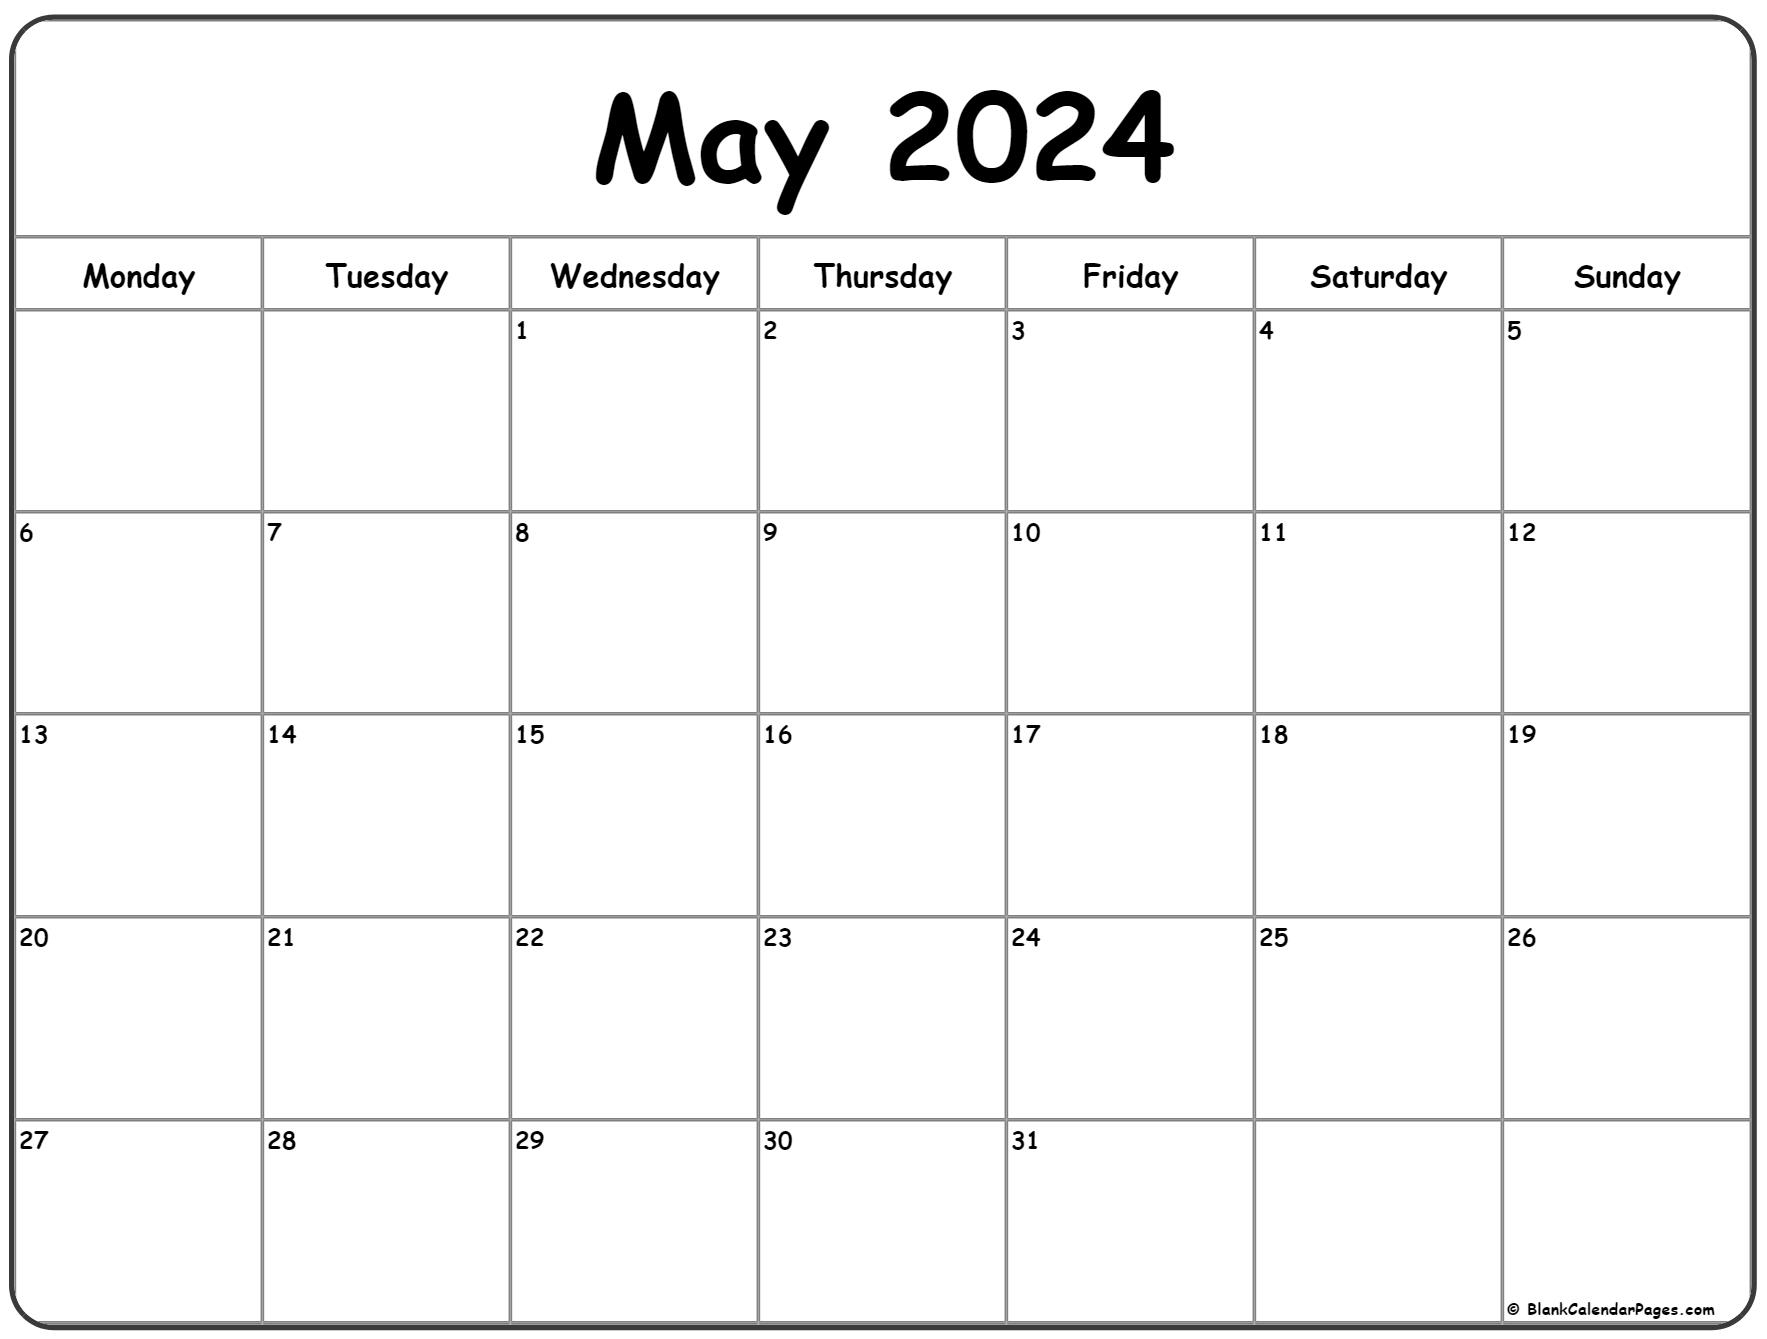 May 2024 Monday Calendar | Monday To Sunday for Printable Calendar For May 2024